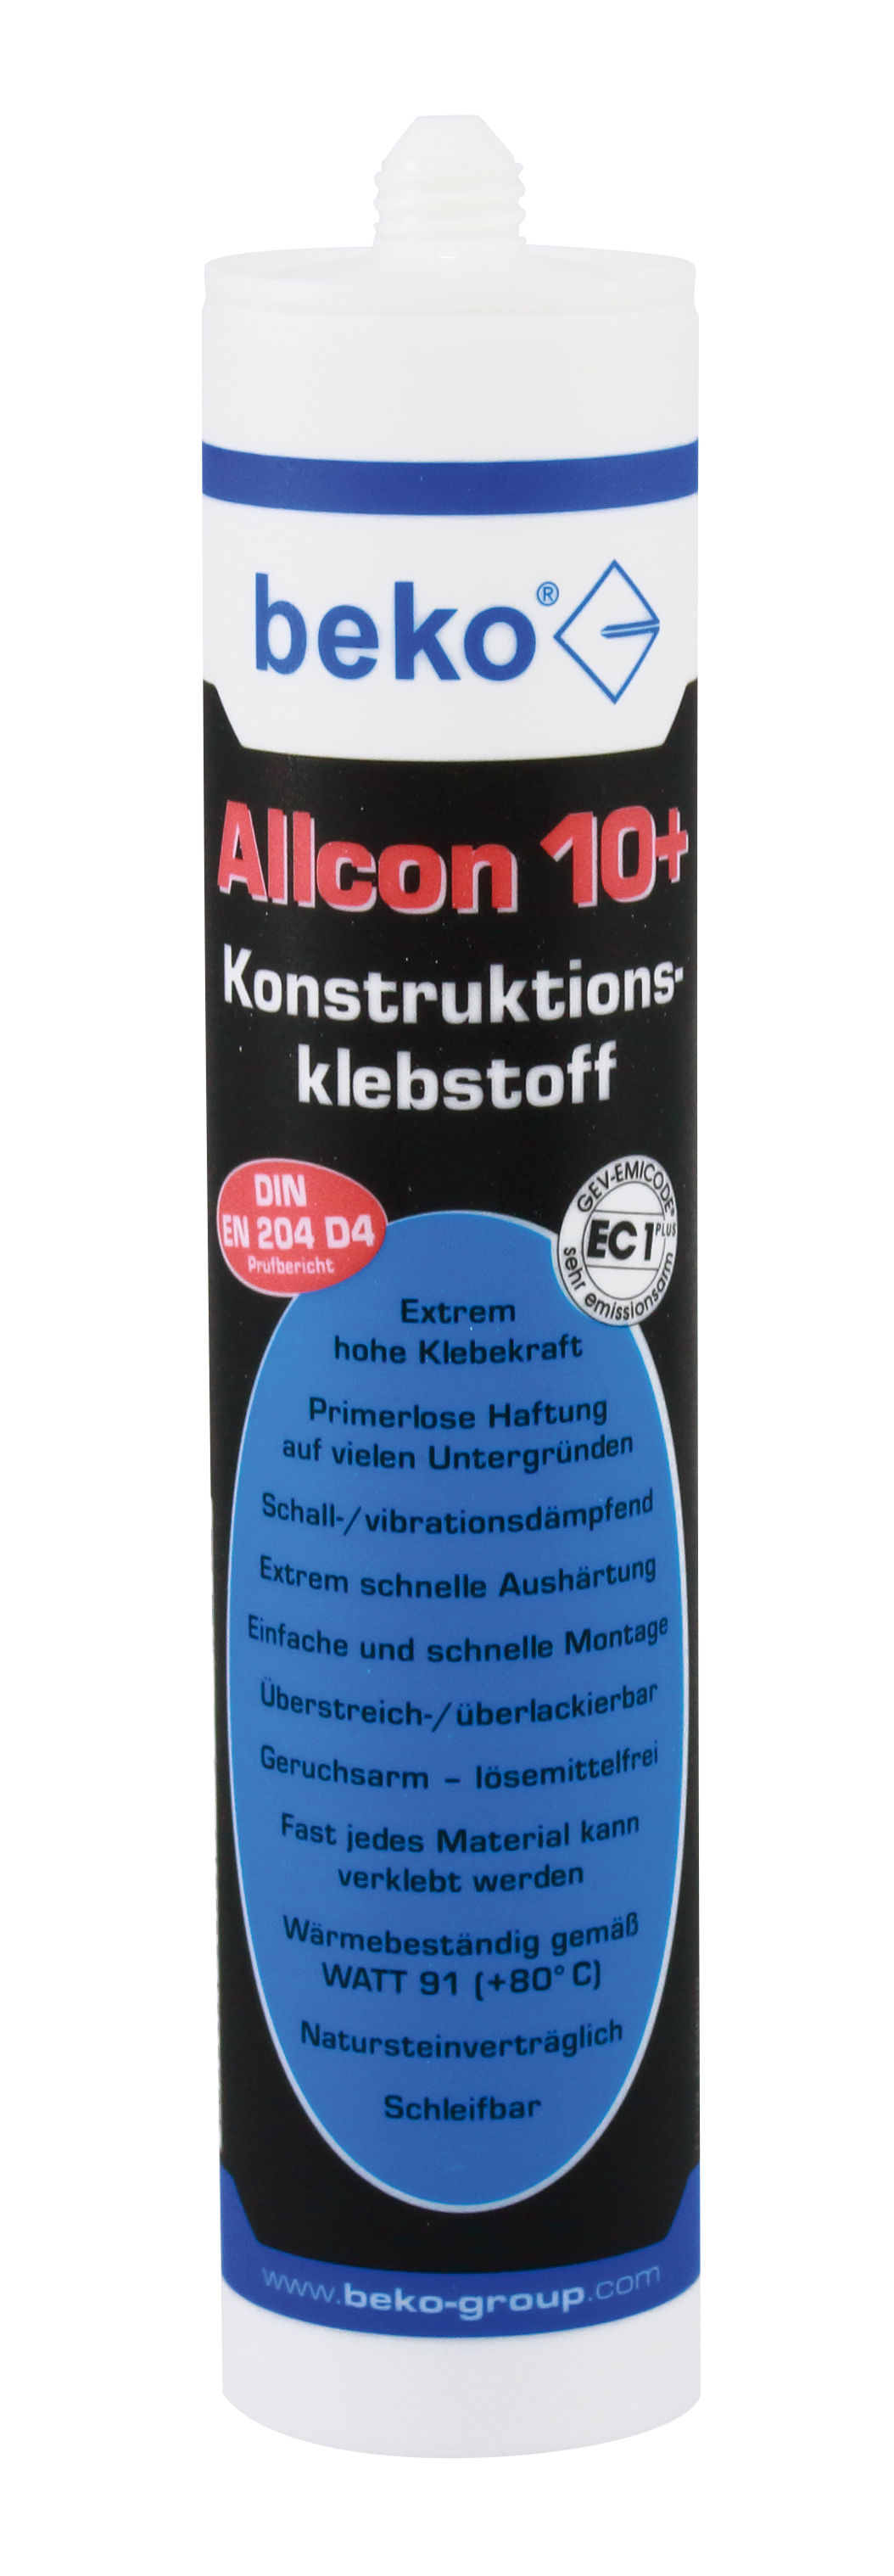 Alcon 10 anwendung momclnt alcon iris retractors